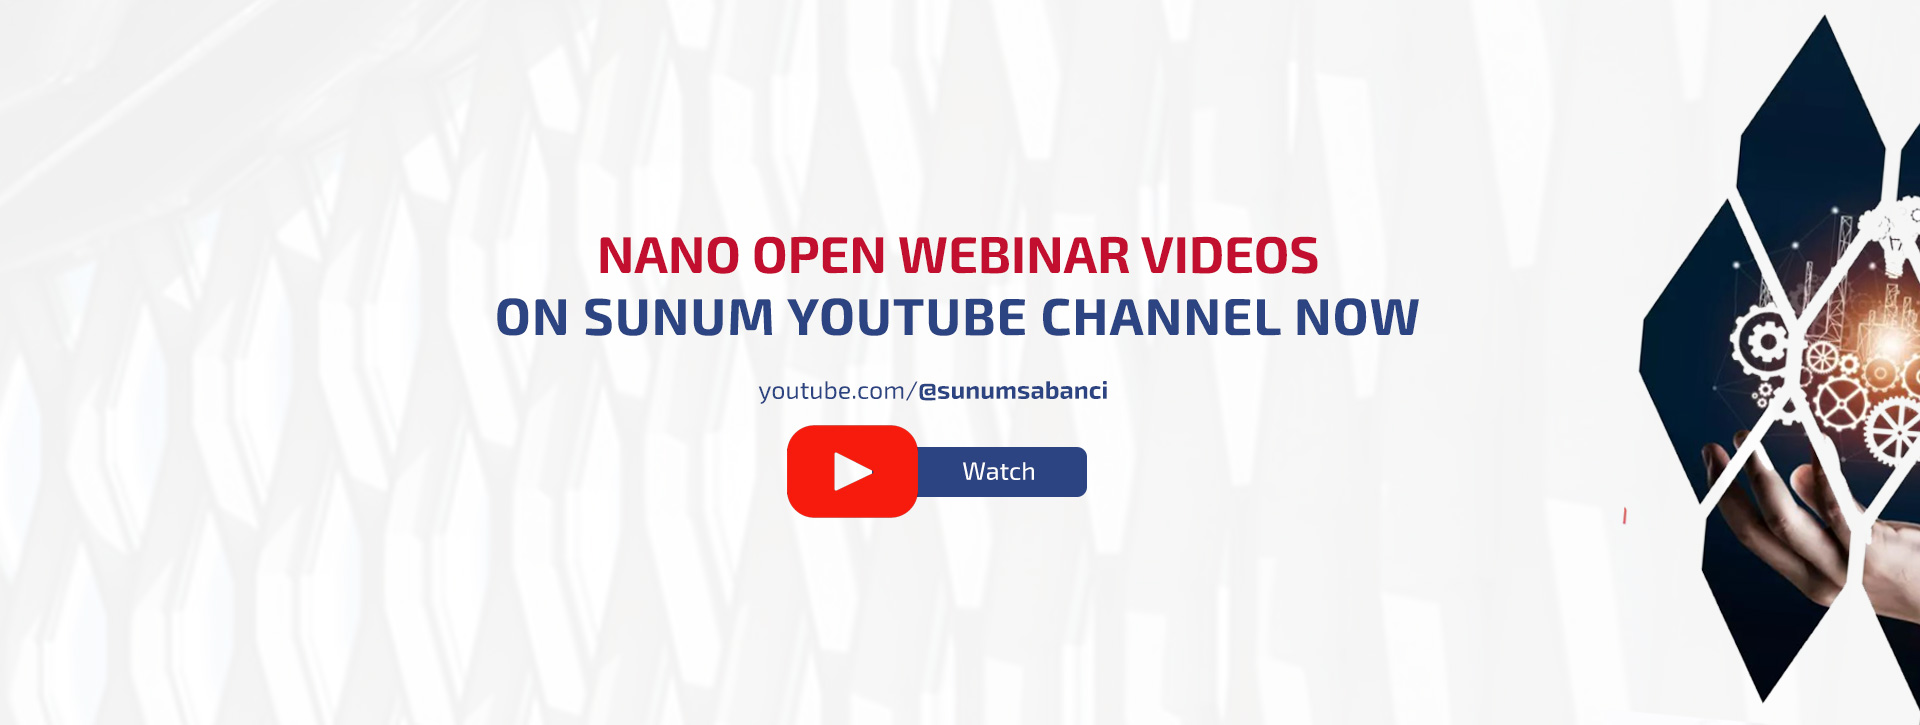 Nano Open Webinar Videos are on YouTube